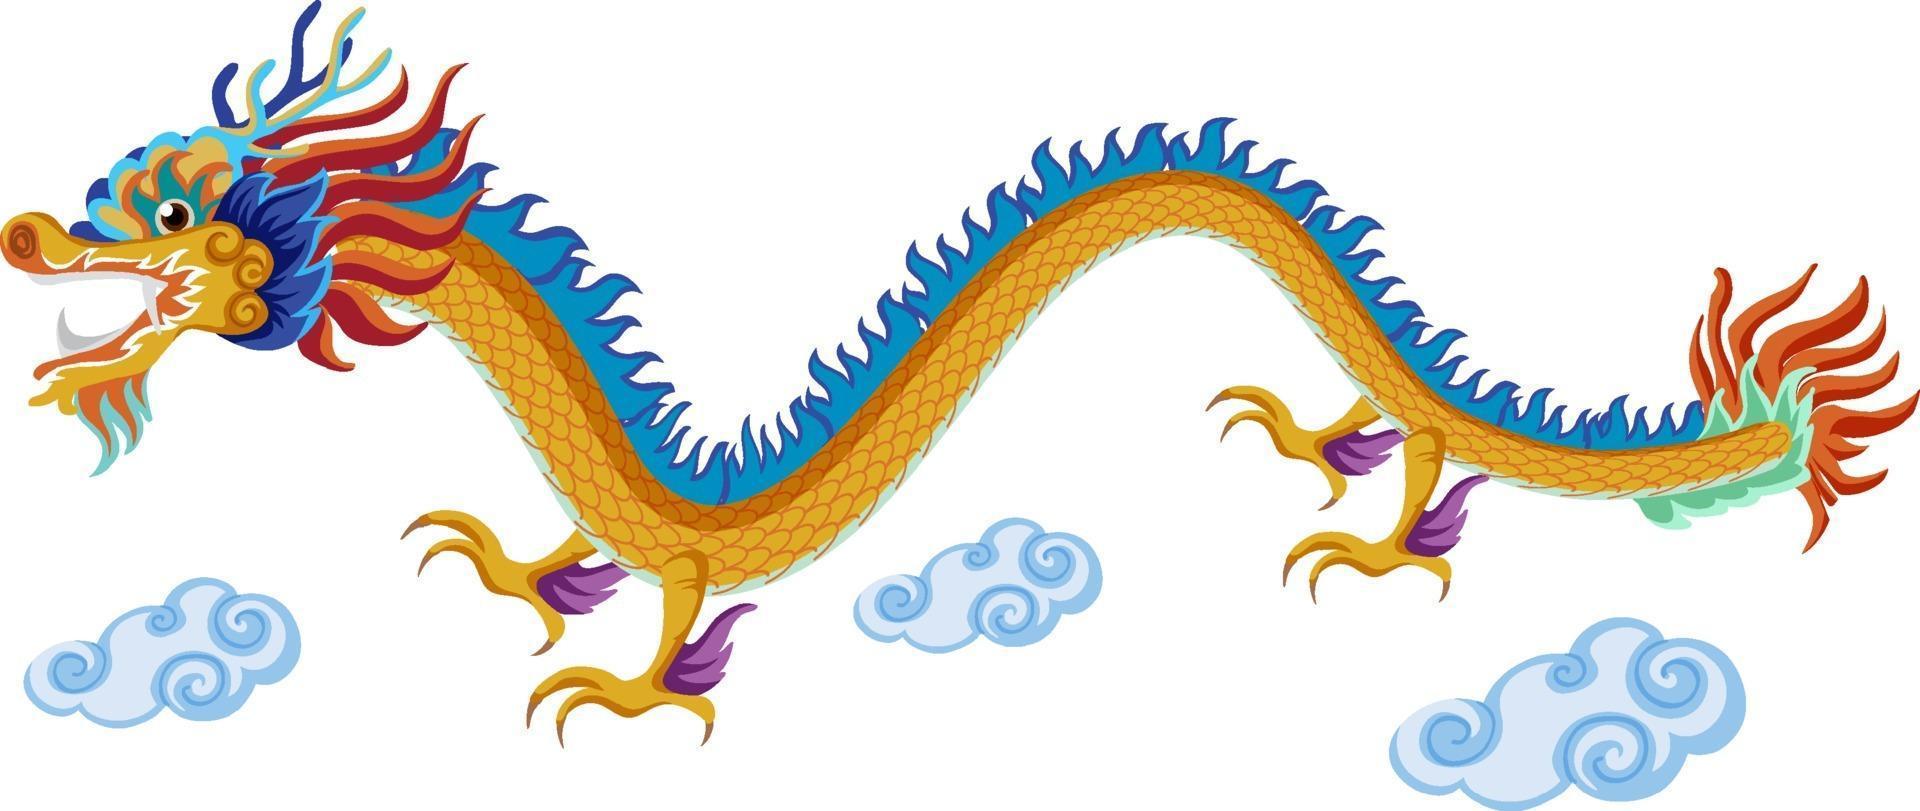 Chinese draak die over wolken vliegt die op witte achtergrond worden geïsoleerd vector